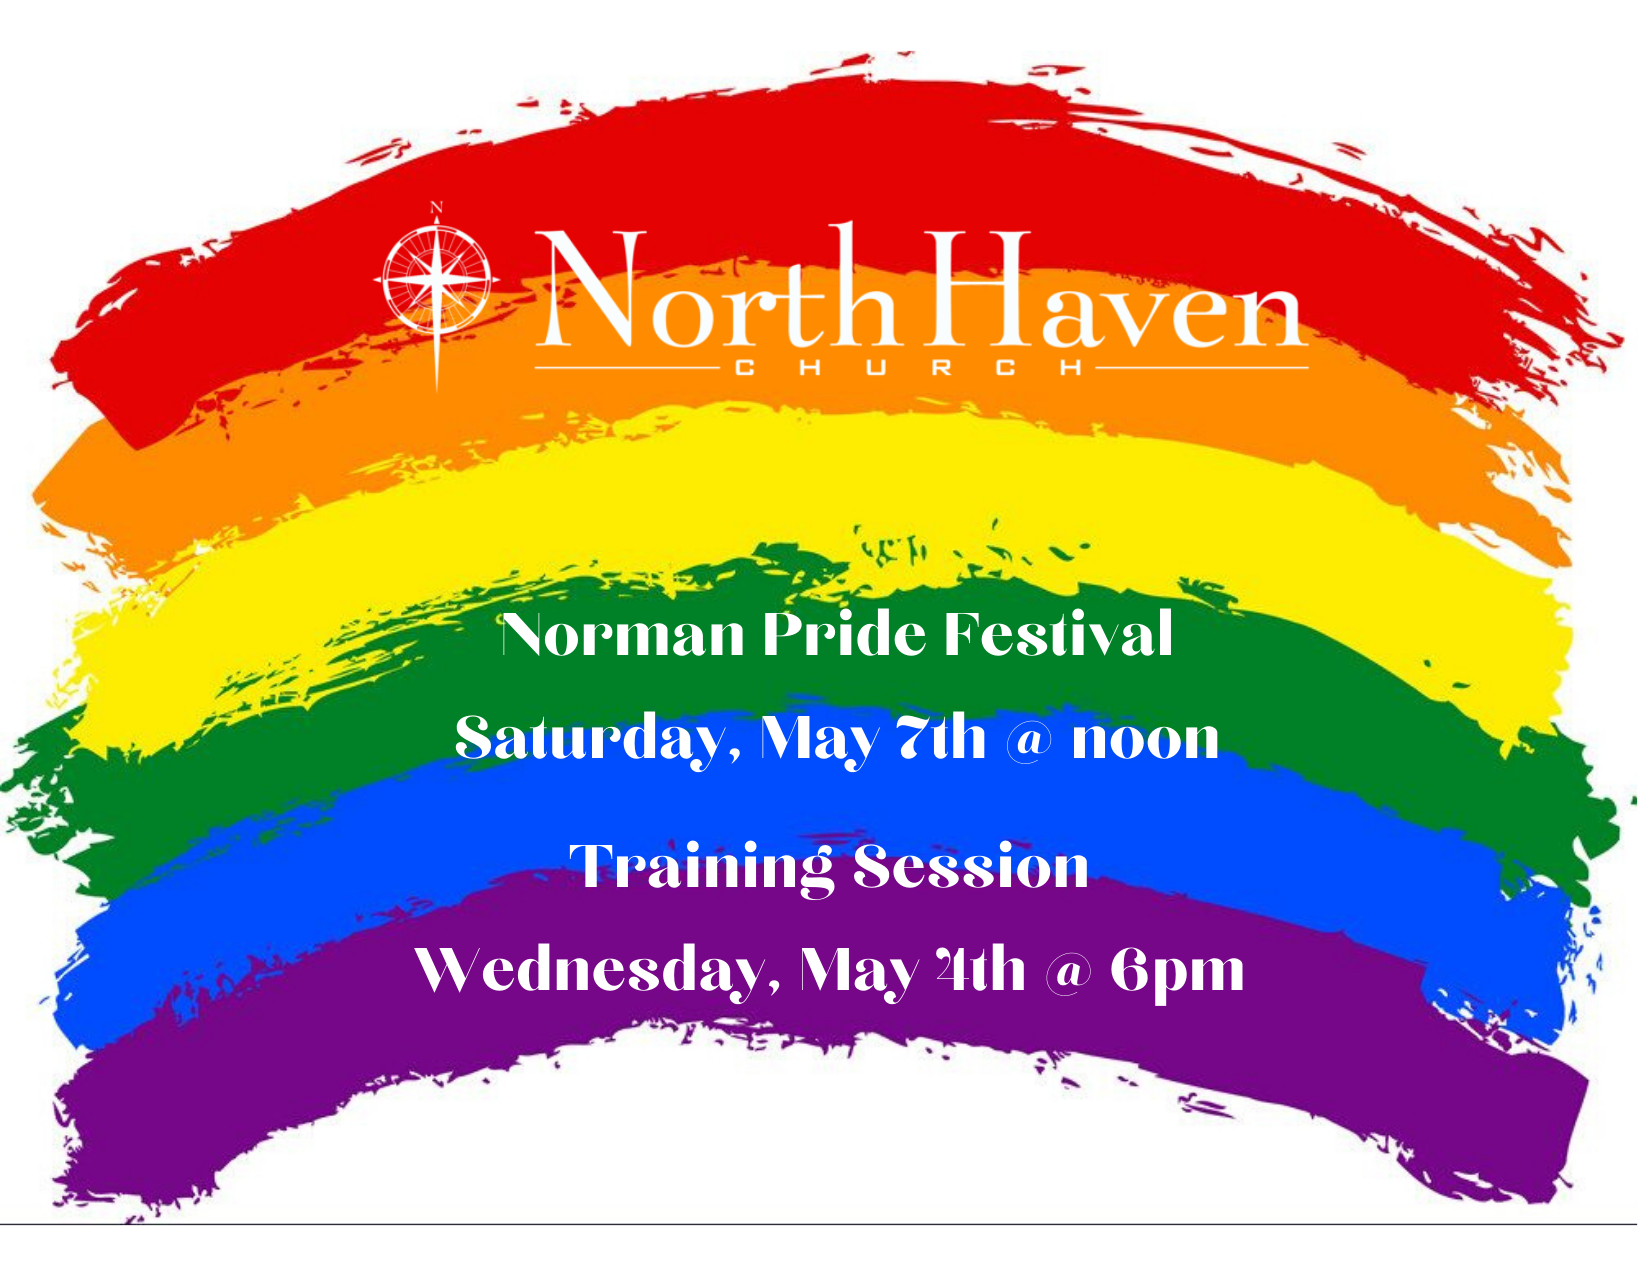 Norman Pride Festival NorthHaven Church in Norman, Oklahoma